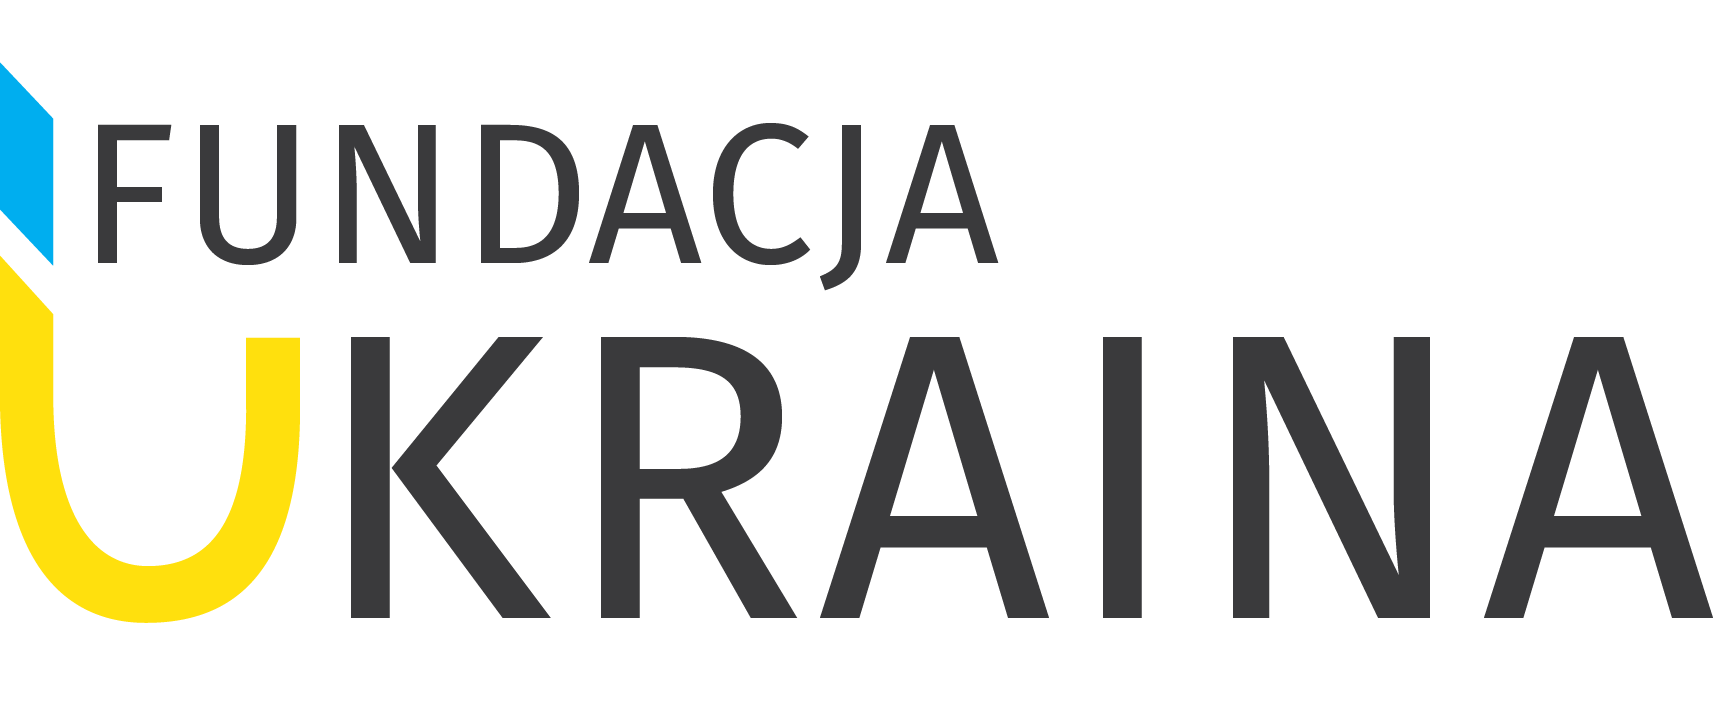 Foundation Ukraine logo